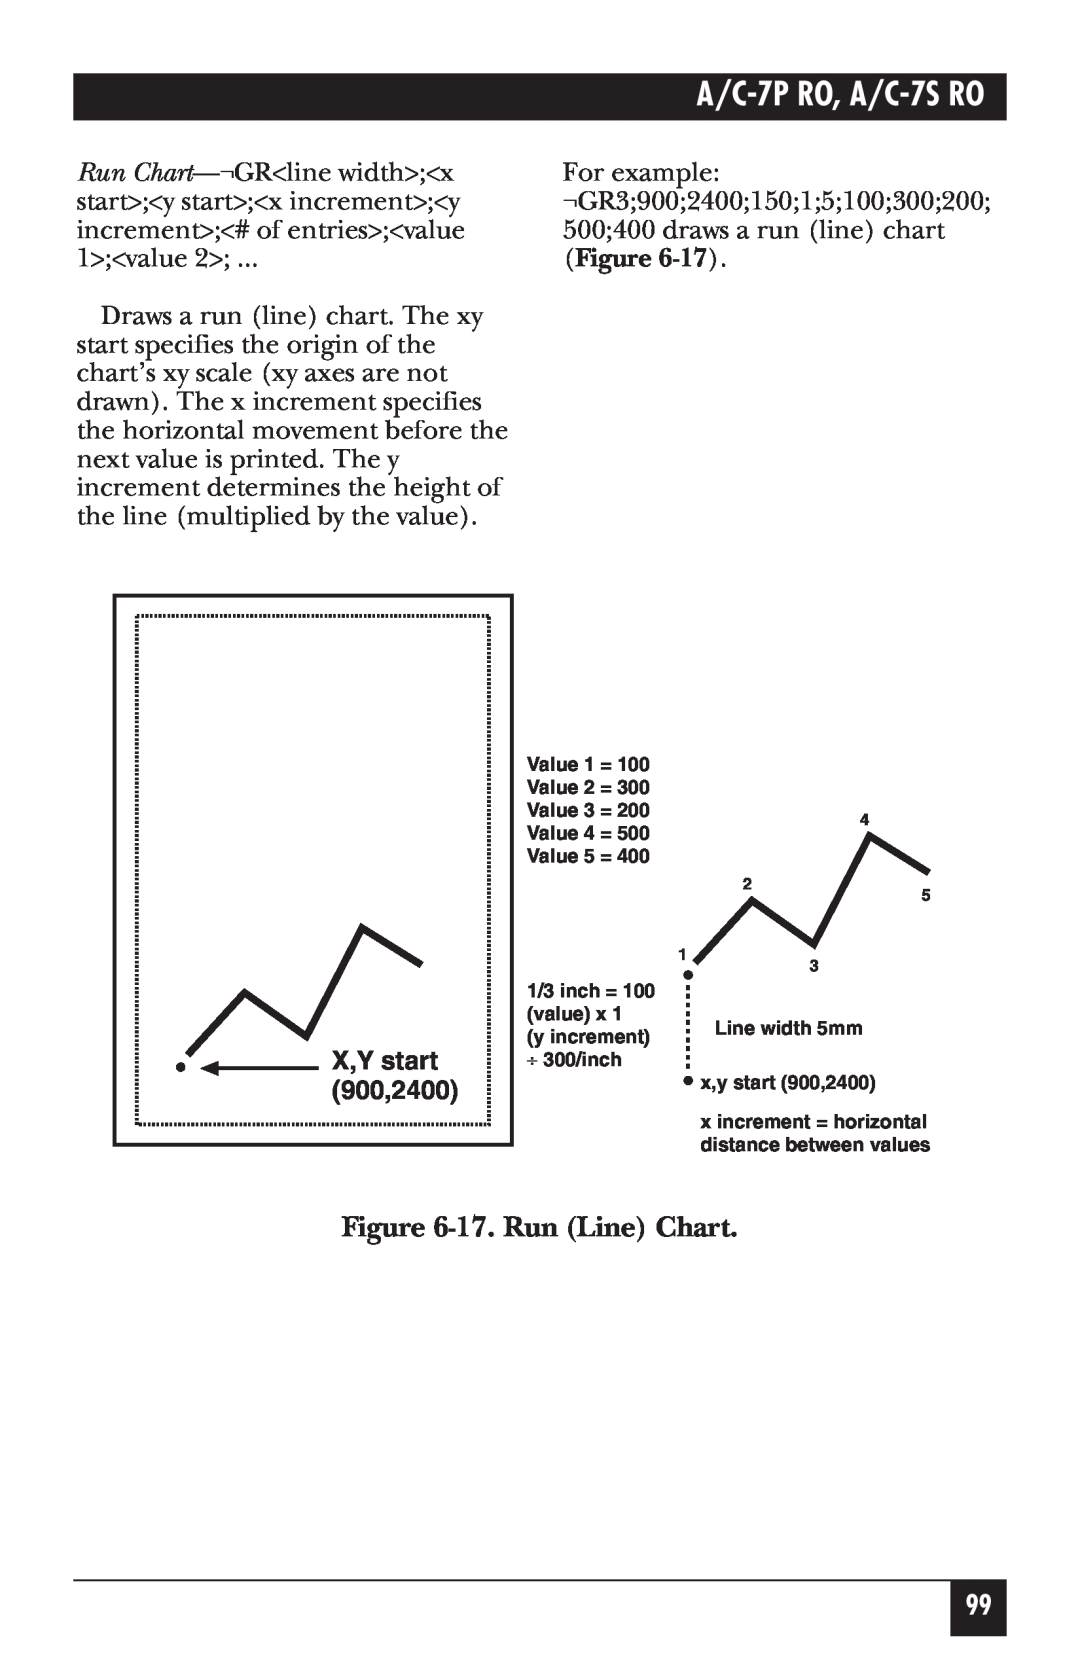 Black Box manual 17. Run Line Chart, 900,2400, A/C-7P RO, A/C-7S RO, X,Y start, 1/3 inch =, x increment = horizontal 